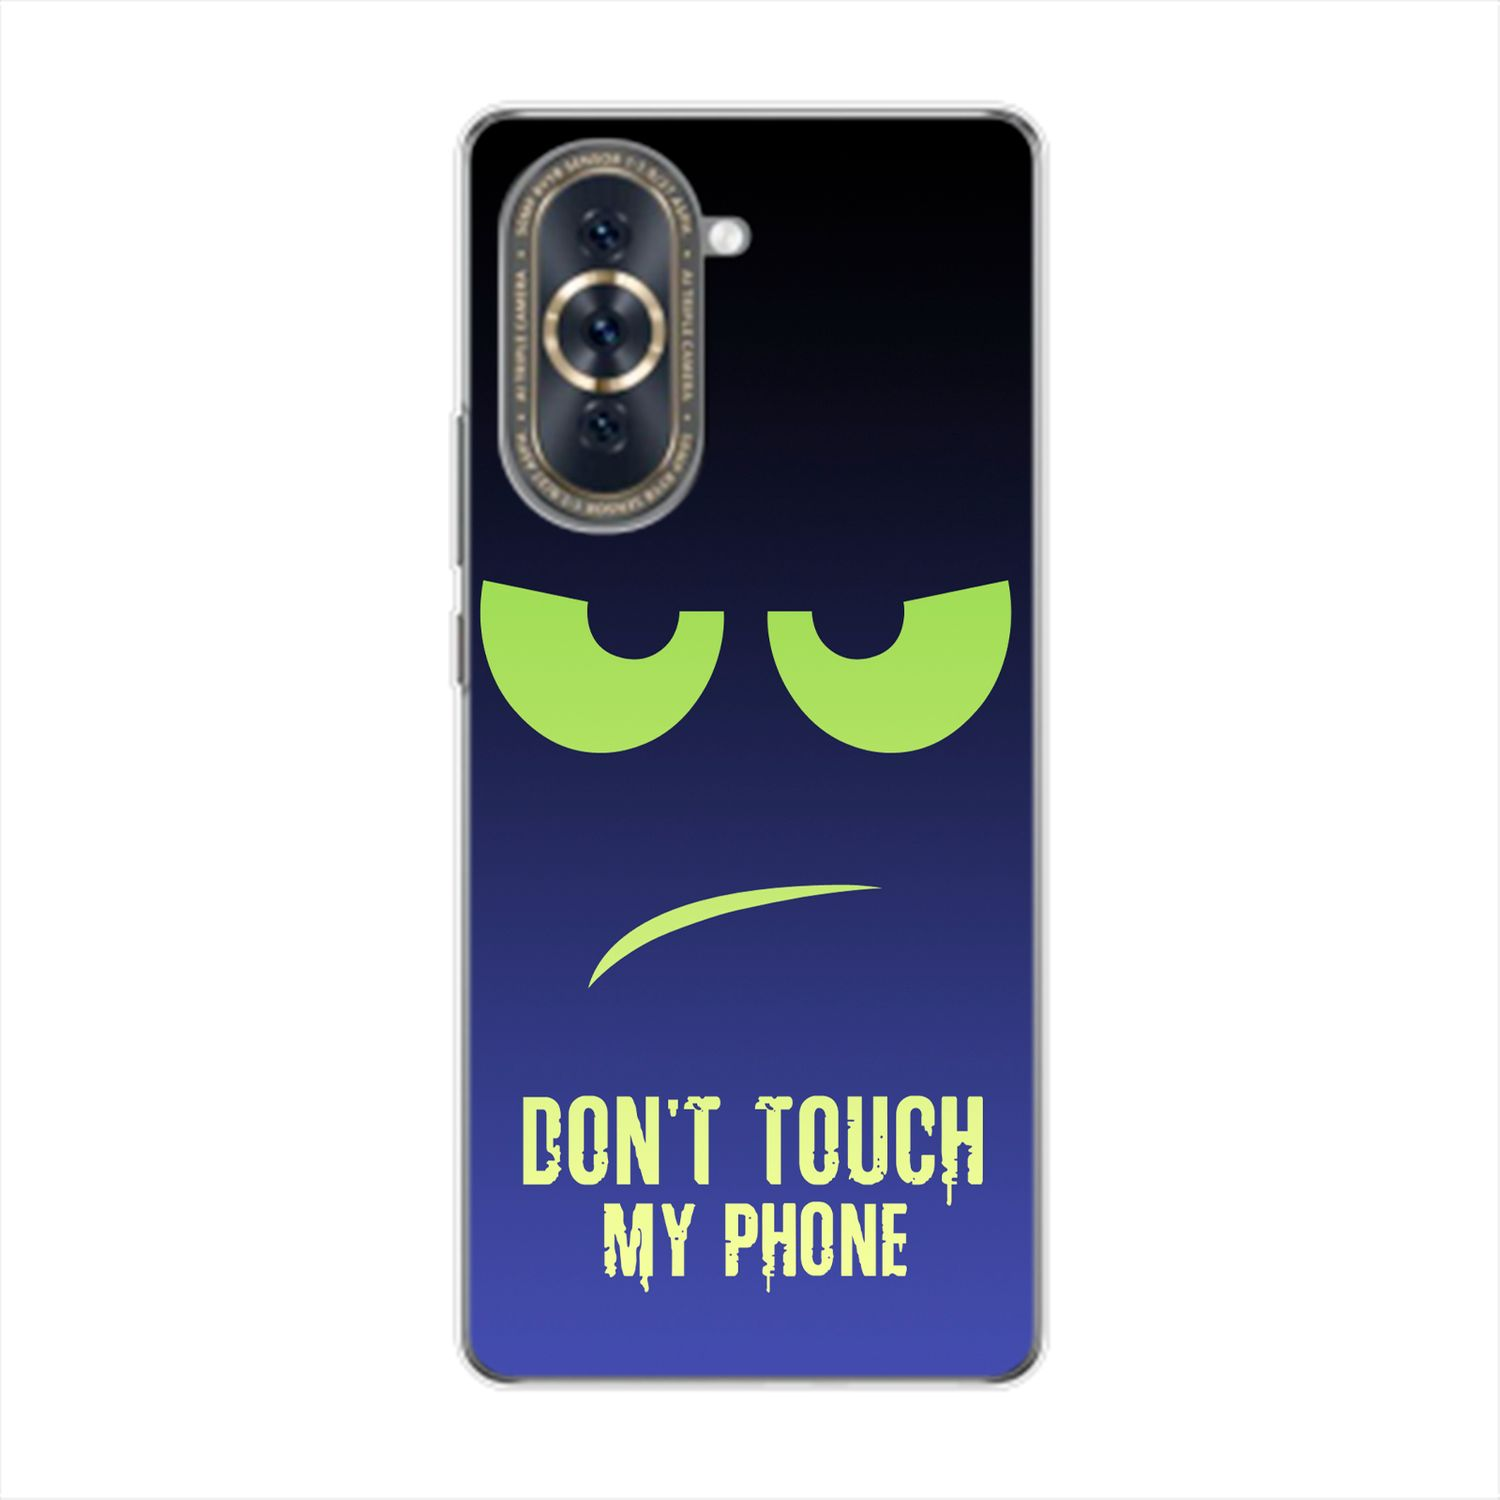 KÖNIG DESIGN Backcover, Dont Touch My Case, Grün Phone 10, Huawei, nova Blau